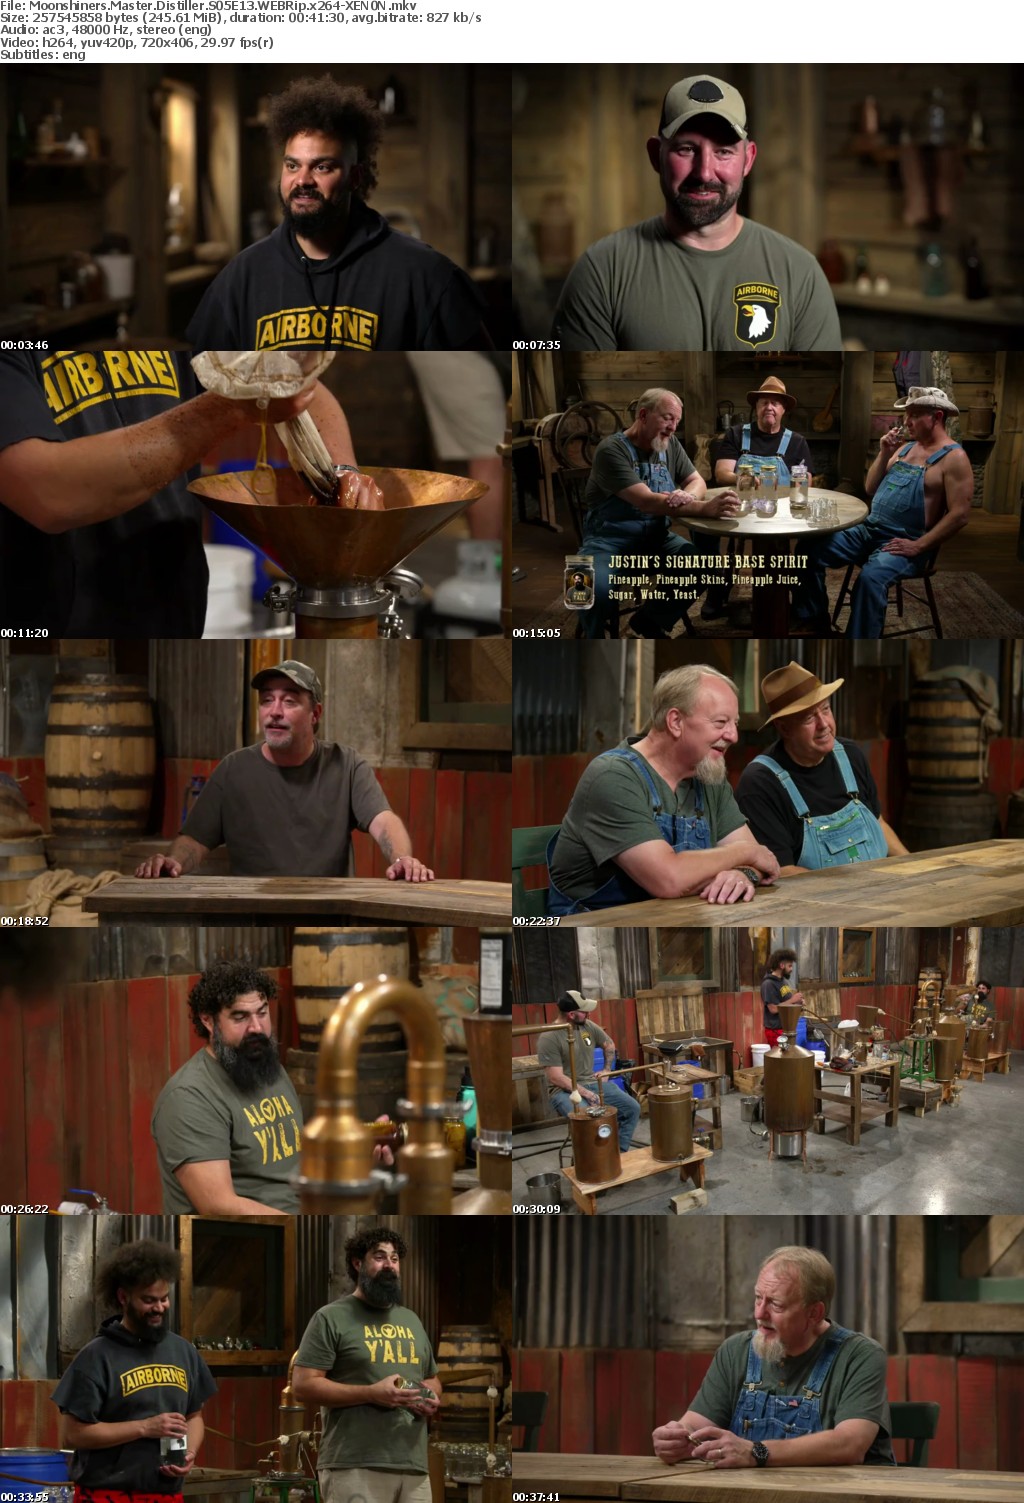 Moonshiners Master Distiller S05E13 WEBRip x264-XEN0N